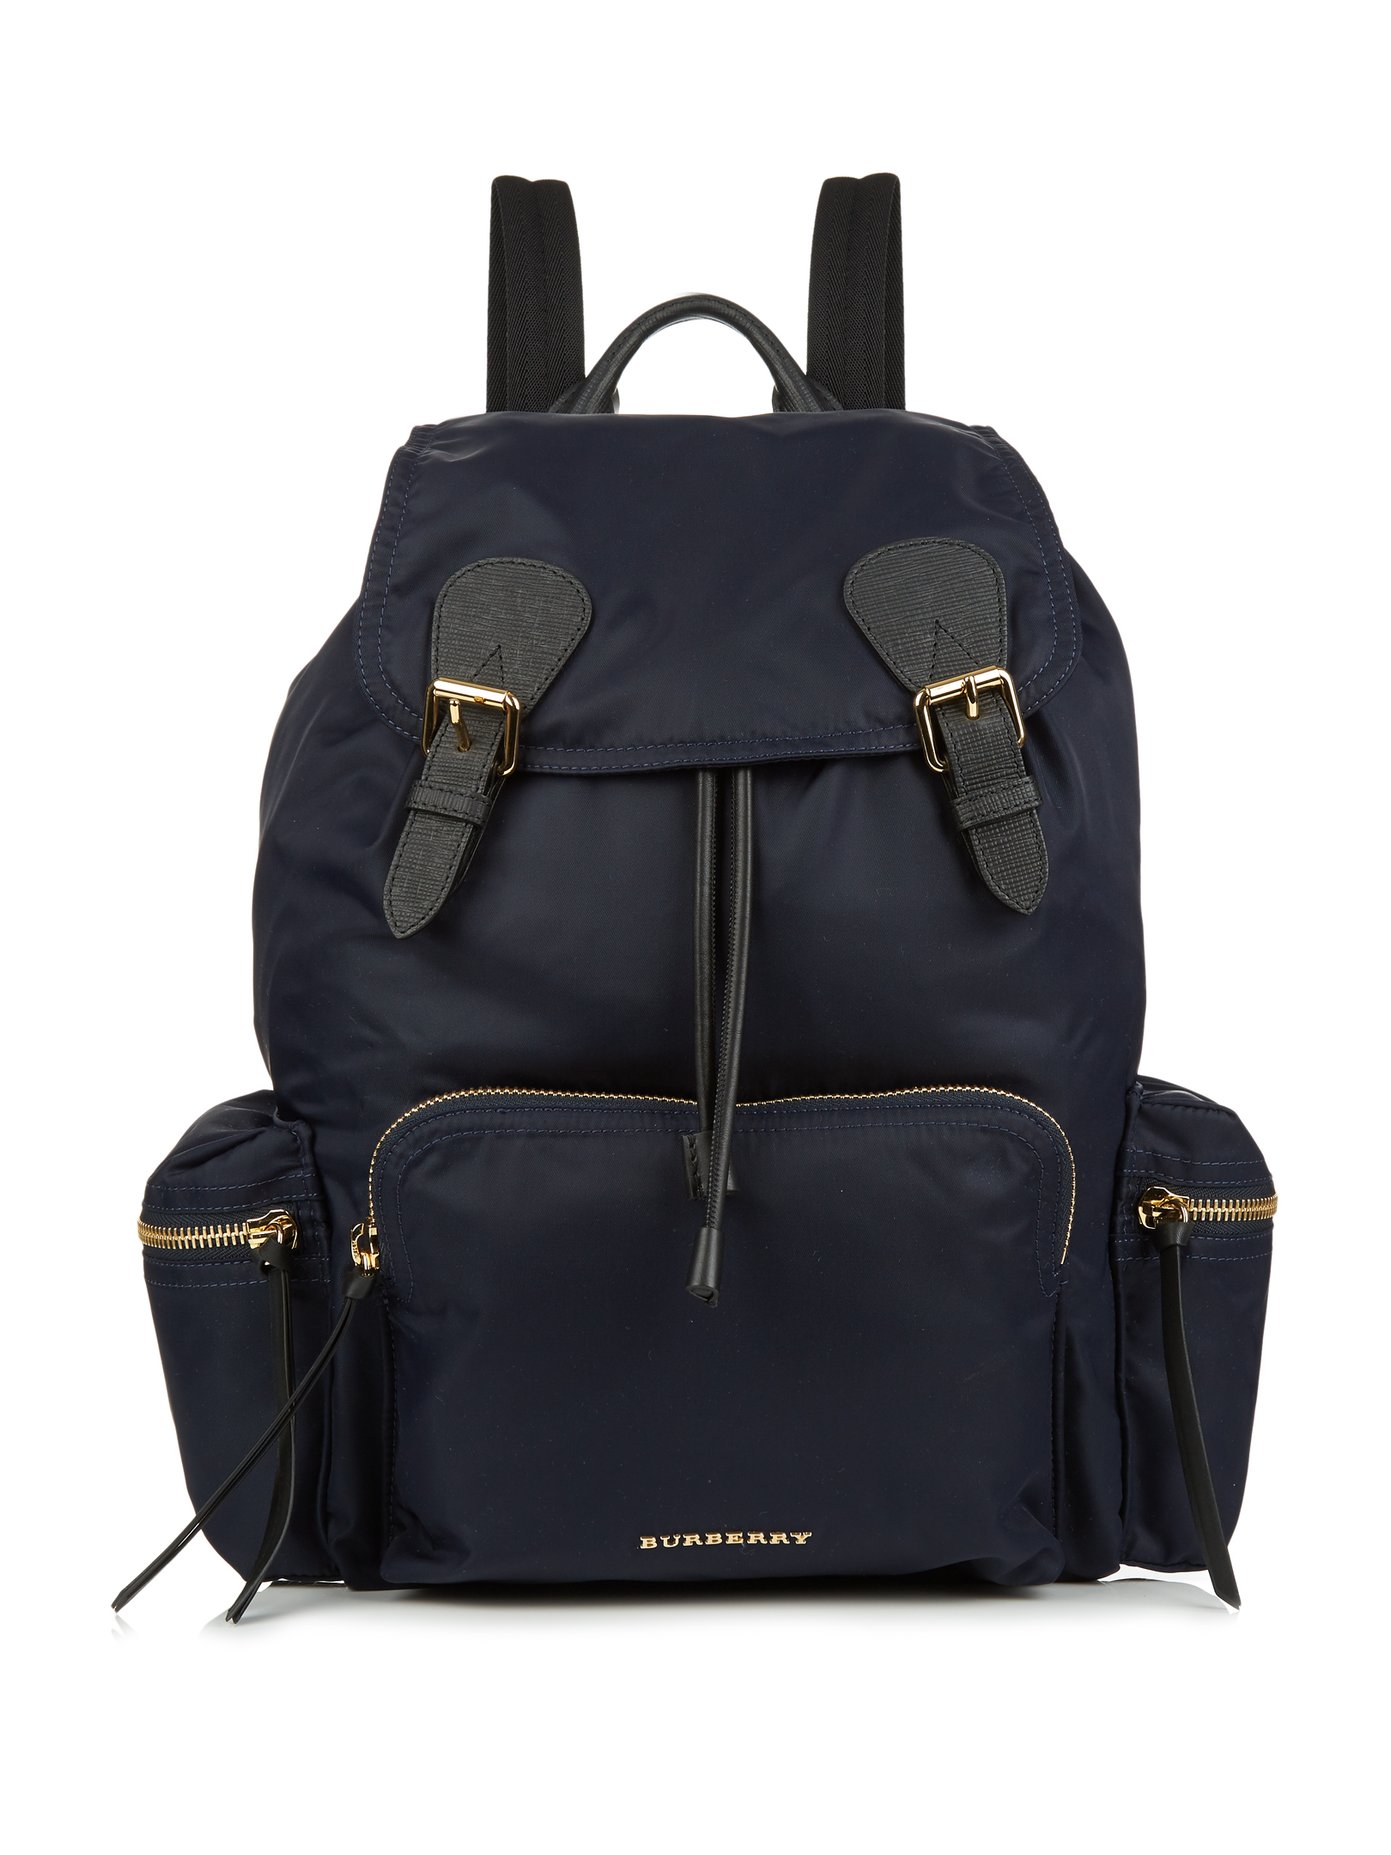 burberry prorsum nylon backpack